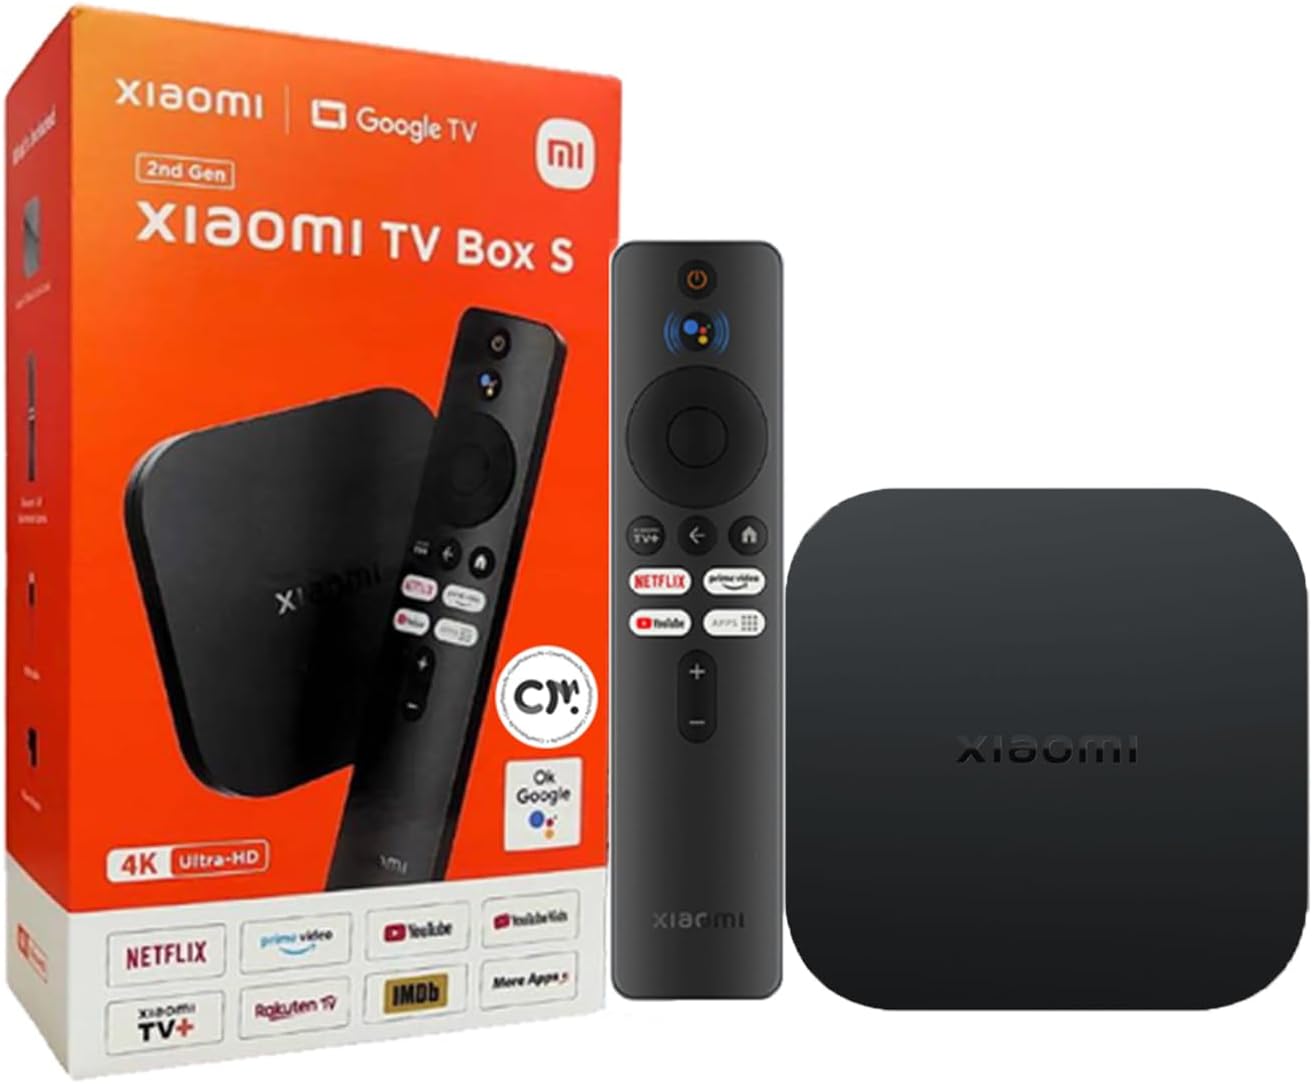 XIAOMI TV BOX S 4K 2nd Gen SMART TV ODTWARZACZ MULTIMEDIALNY